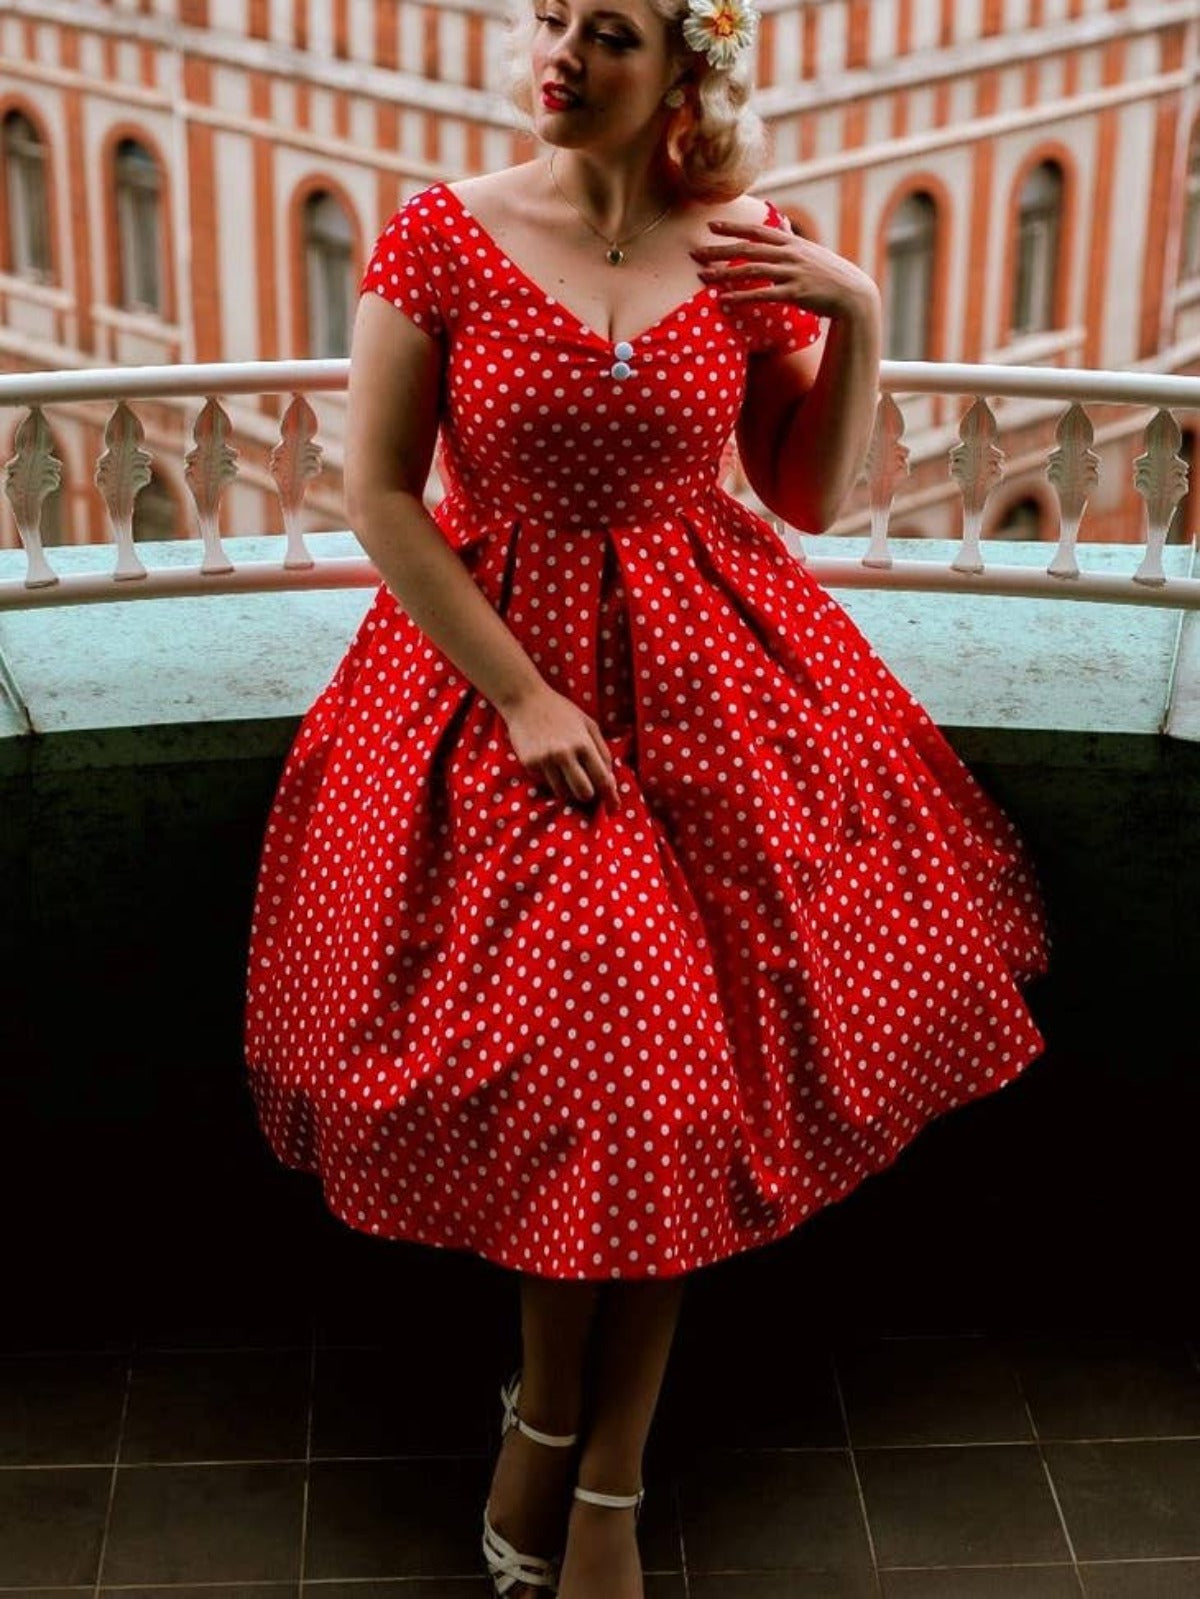 Shop Online Girls Red Polka Dot Print Sleeveless Party Dress at ₹929